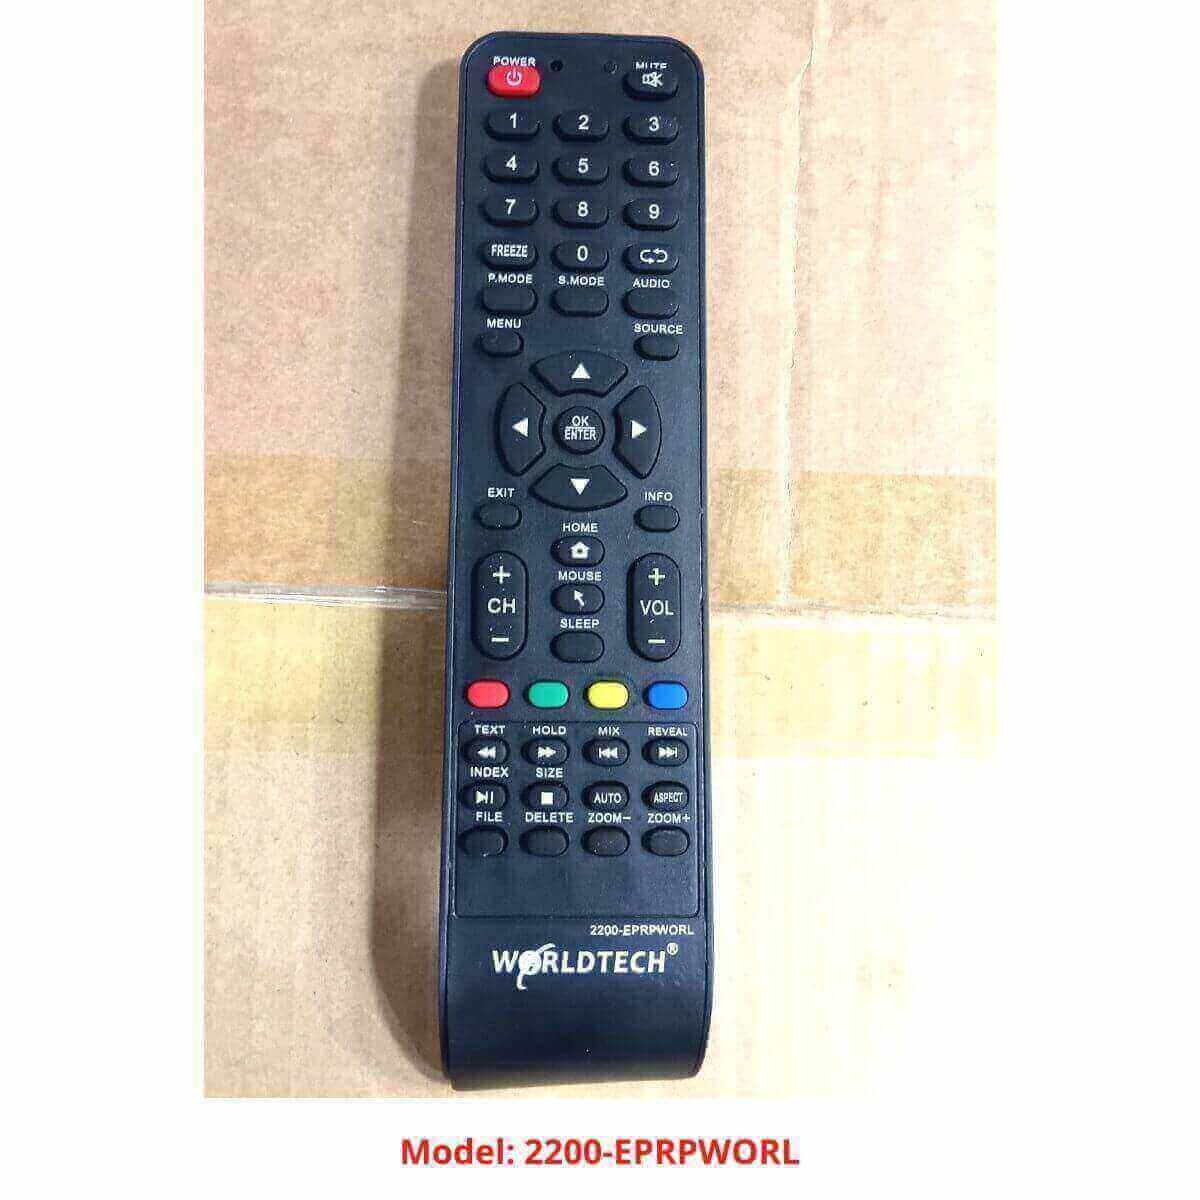 WORLDTECH COMMON LCD LED TV REMOTE 2200-EPRPWORL {...... BD